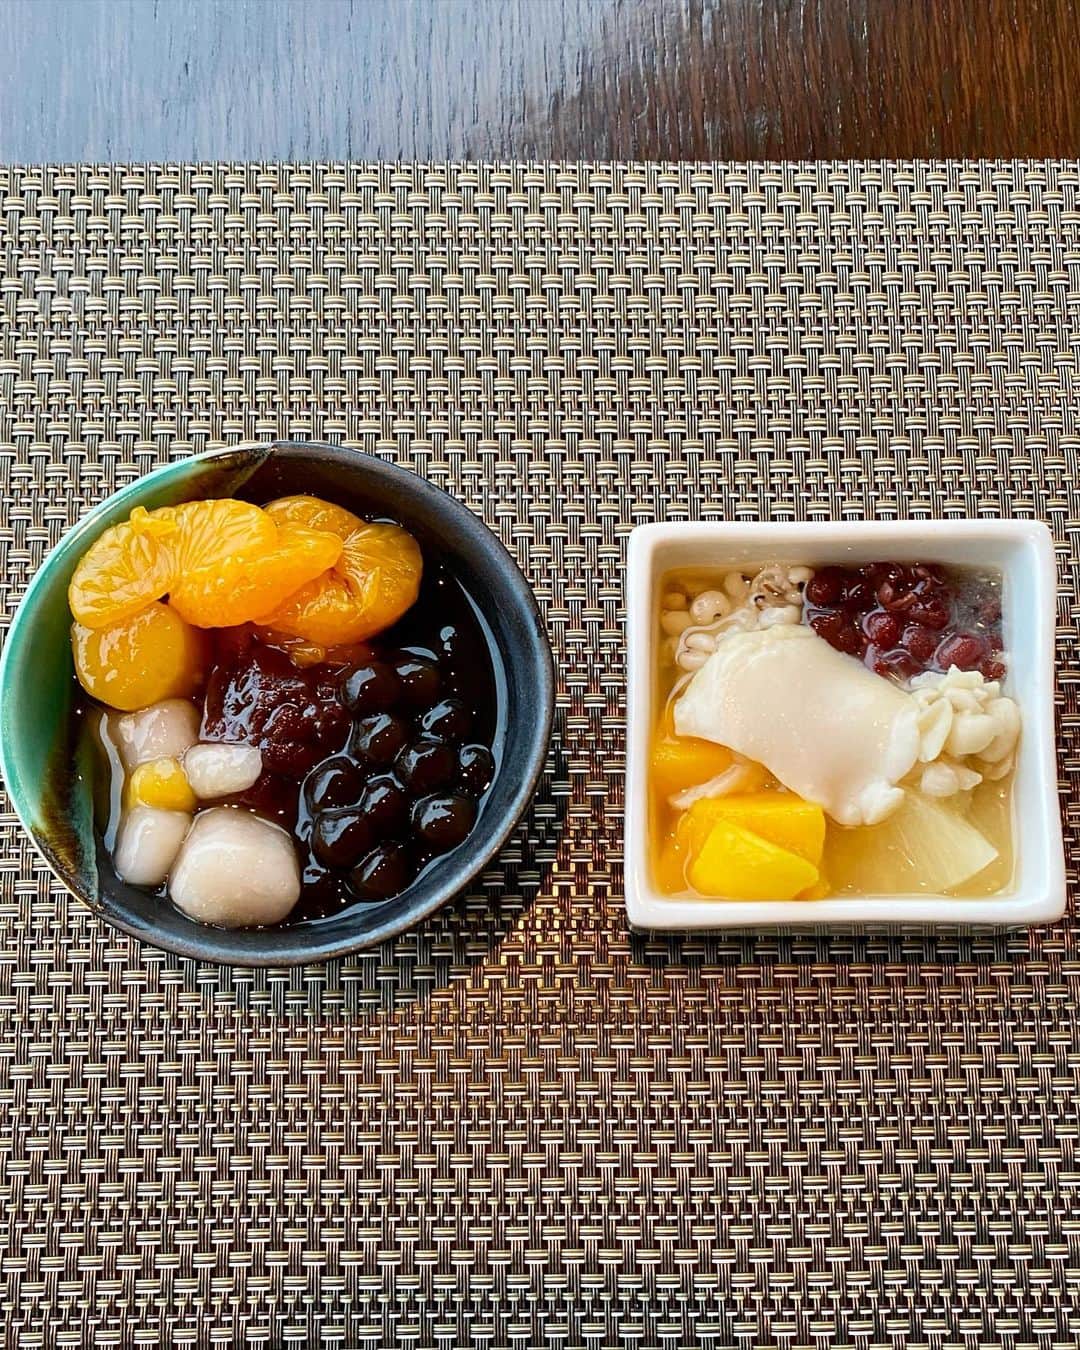 InterContinental Tokyo Bayのインスタグラム：「.  シェフズライブキッチンでは、台湾発祥のスイーツ専門店「MeetFresh 鮮芋仙」とのコラボレーションスイーツを提供中です。 仙草ゼリーor豆花に、みかん、パイナップル、マンゴー、はと麦、タピオカ、芋園、茹でピーナッツとバリエーション豊かなトッピングを加え、黒蜜をかけたら完成🥭🍊🥜 特に大豆から丁寧に作る豆花は、低カロリーで特に年配の方やお子様、女性に嬉しいおすすめのヘルシースイーツです。  6月27日までの期間限定のコラボレーションとなりますので、台湾フード＆スイーツを心ゆくまでお楽しみください。  #intercontinentaltokyobay #intercontinental  #intercontinentallife #インターコンチネンタル東京ベイ  #ホテルインターコンチネンタル東京ベイ #chefslivekitchen #シェフズライブキッチン #ホテルビュッフェ　#ビュッフェ　 #ランチビュッフェ #ディナービュッフェ　 #台湾ビュッフェ　#台湾 #竹芝　 #浜松町  #台湾フェア　#台湾スイーツ#MeetFresh #ミートフレッシュ #MeetFresh鮮芋仙 #仙草ゼリー　 #豆花 #トウファ #タピオカ #芋園 #はと麦 #茹でピーナッツ  #キャンペーン実施中 #インターコンチネンタル高雄 #エバー航空」